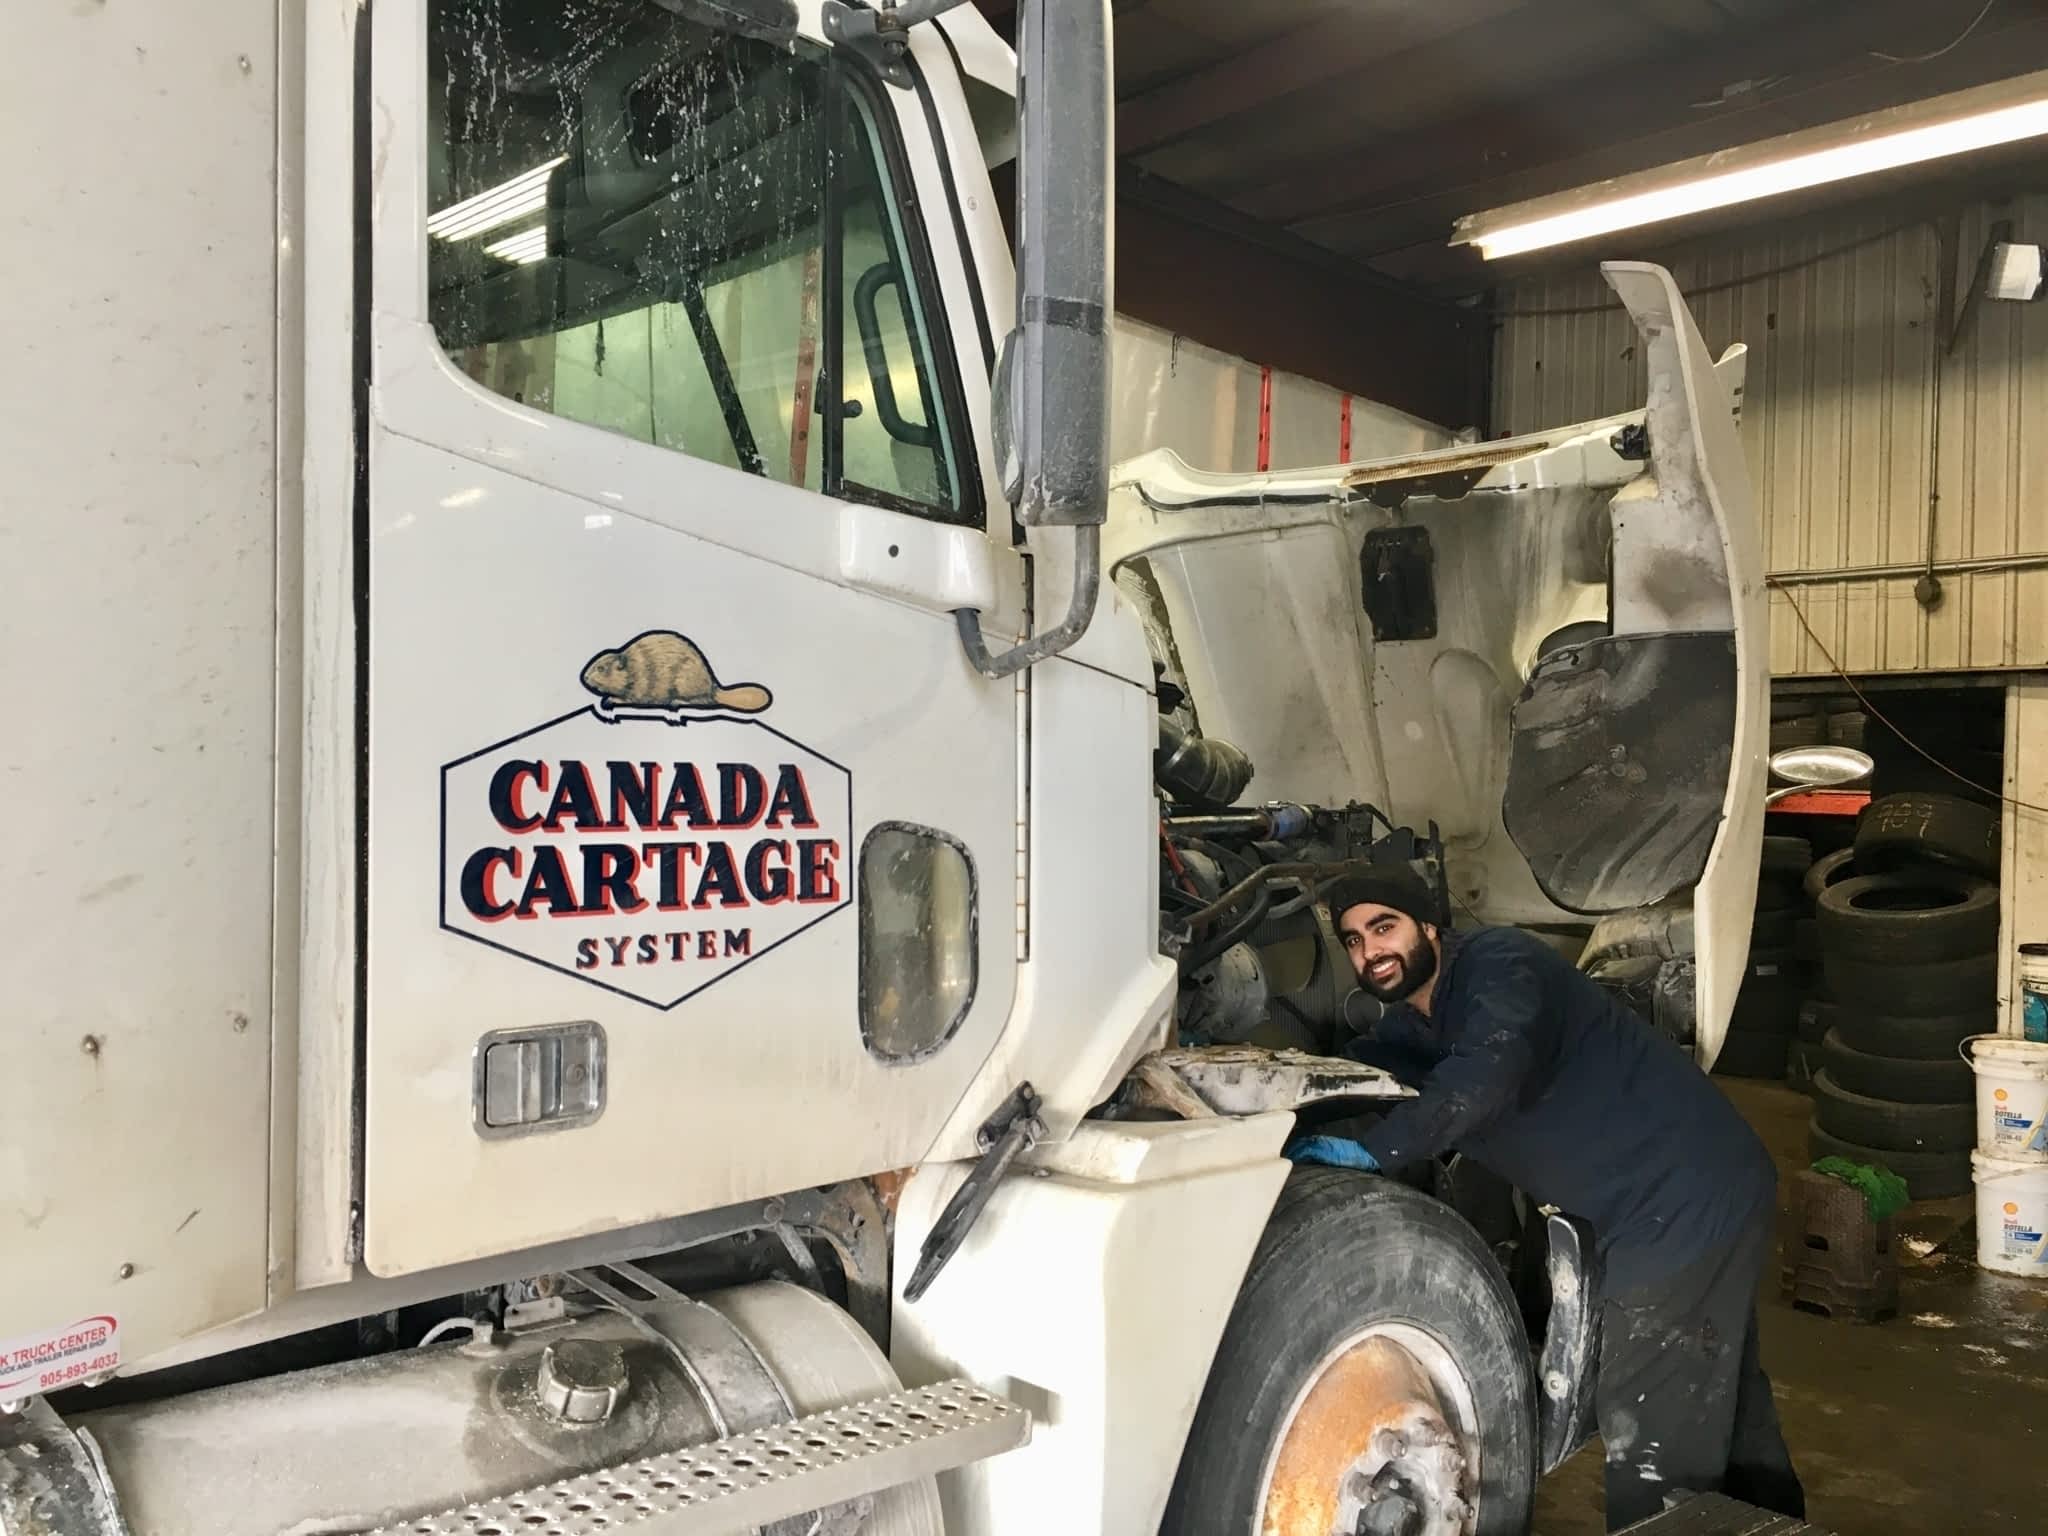 photo RK Truck Center - Truck & Trailer Repair